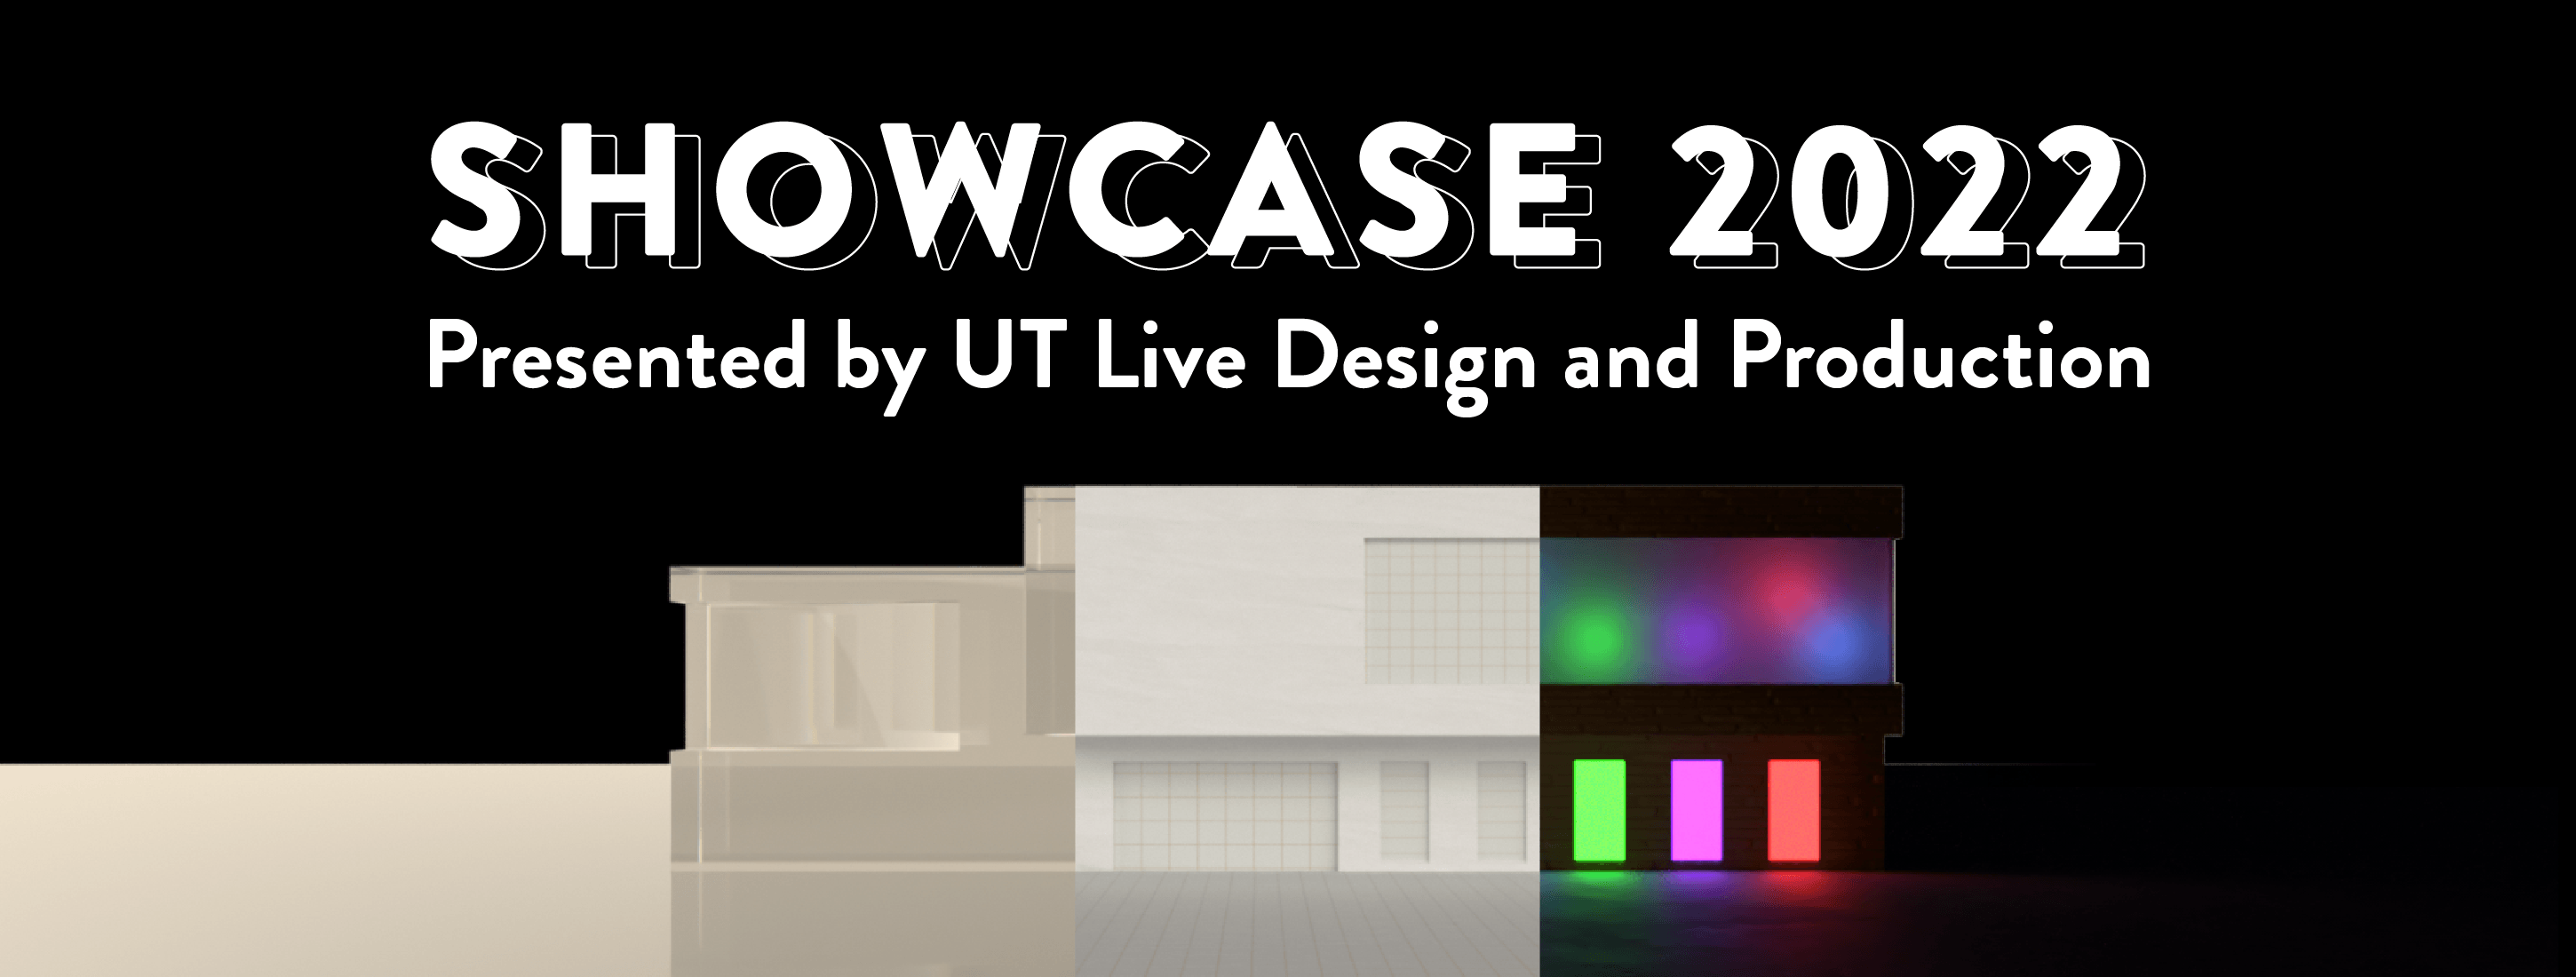 Live Design Showcase 2020 Logo Banner